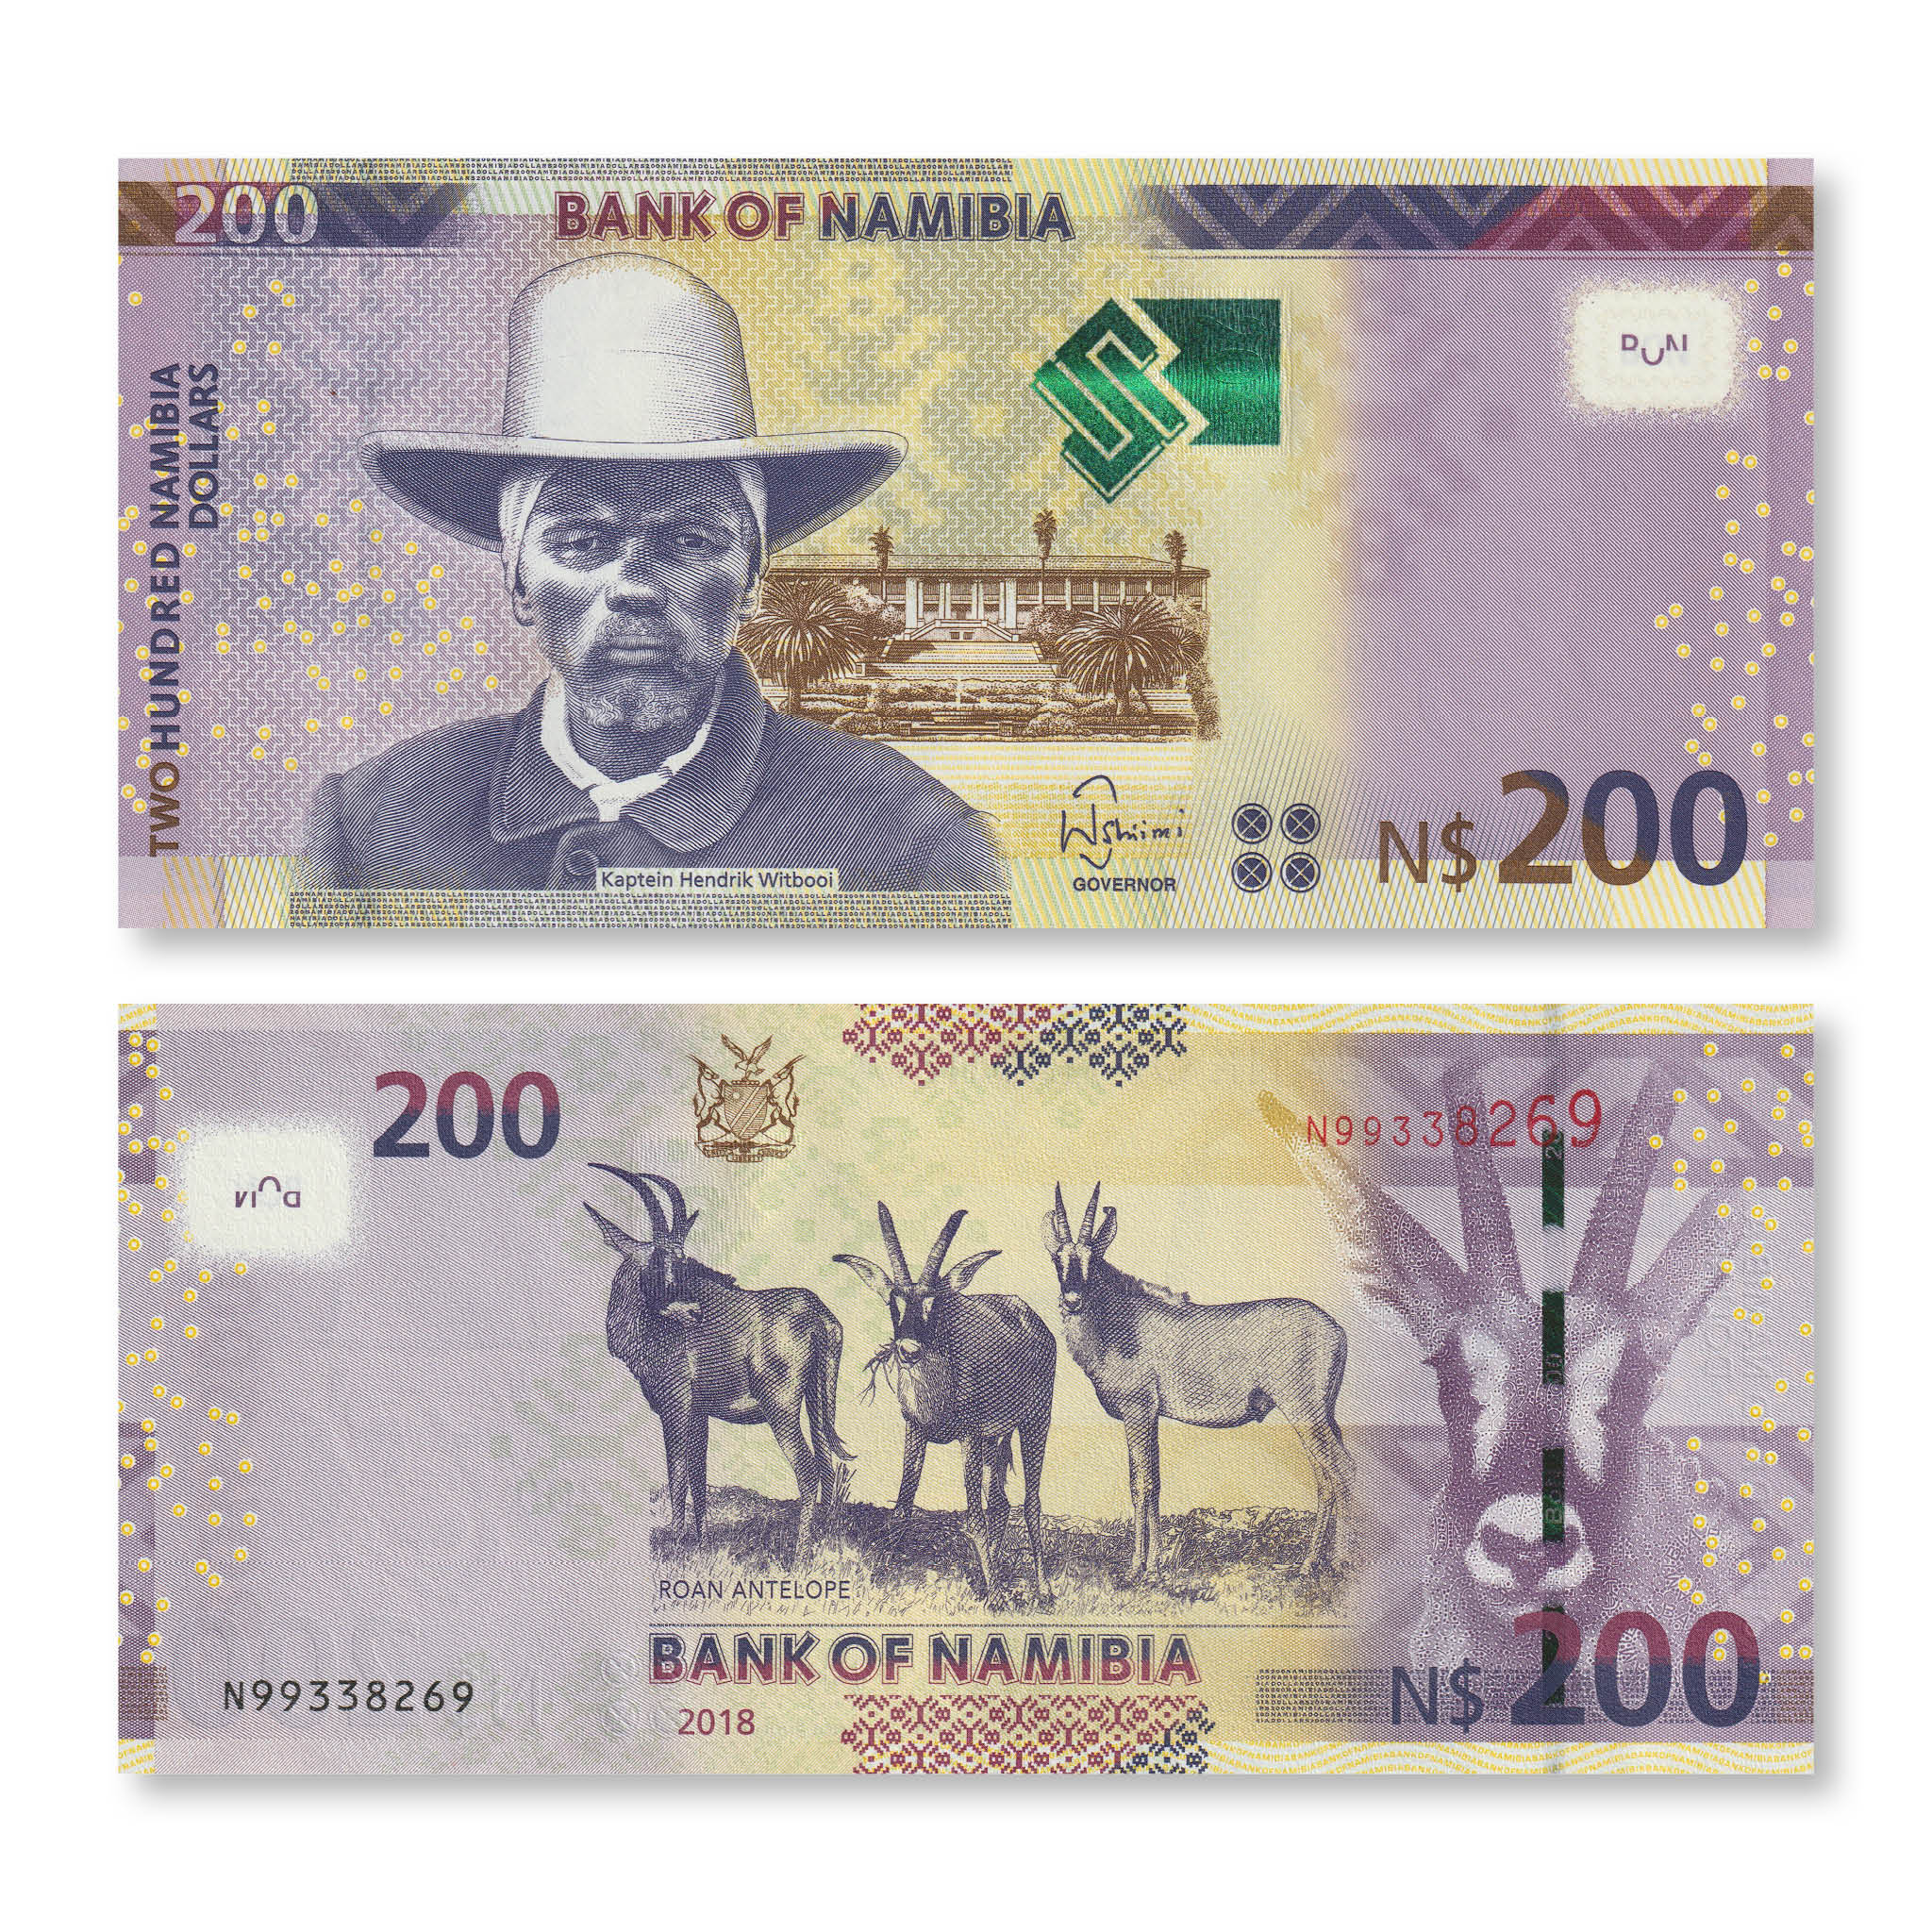 Namibia 200 Dollars, 2018, B213c, P15, UNC - Robert's World Money - World Banknotes